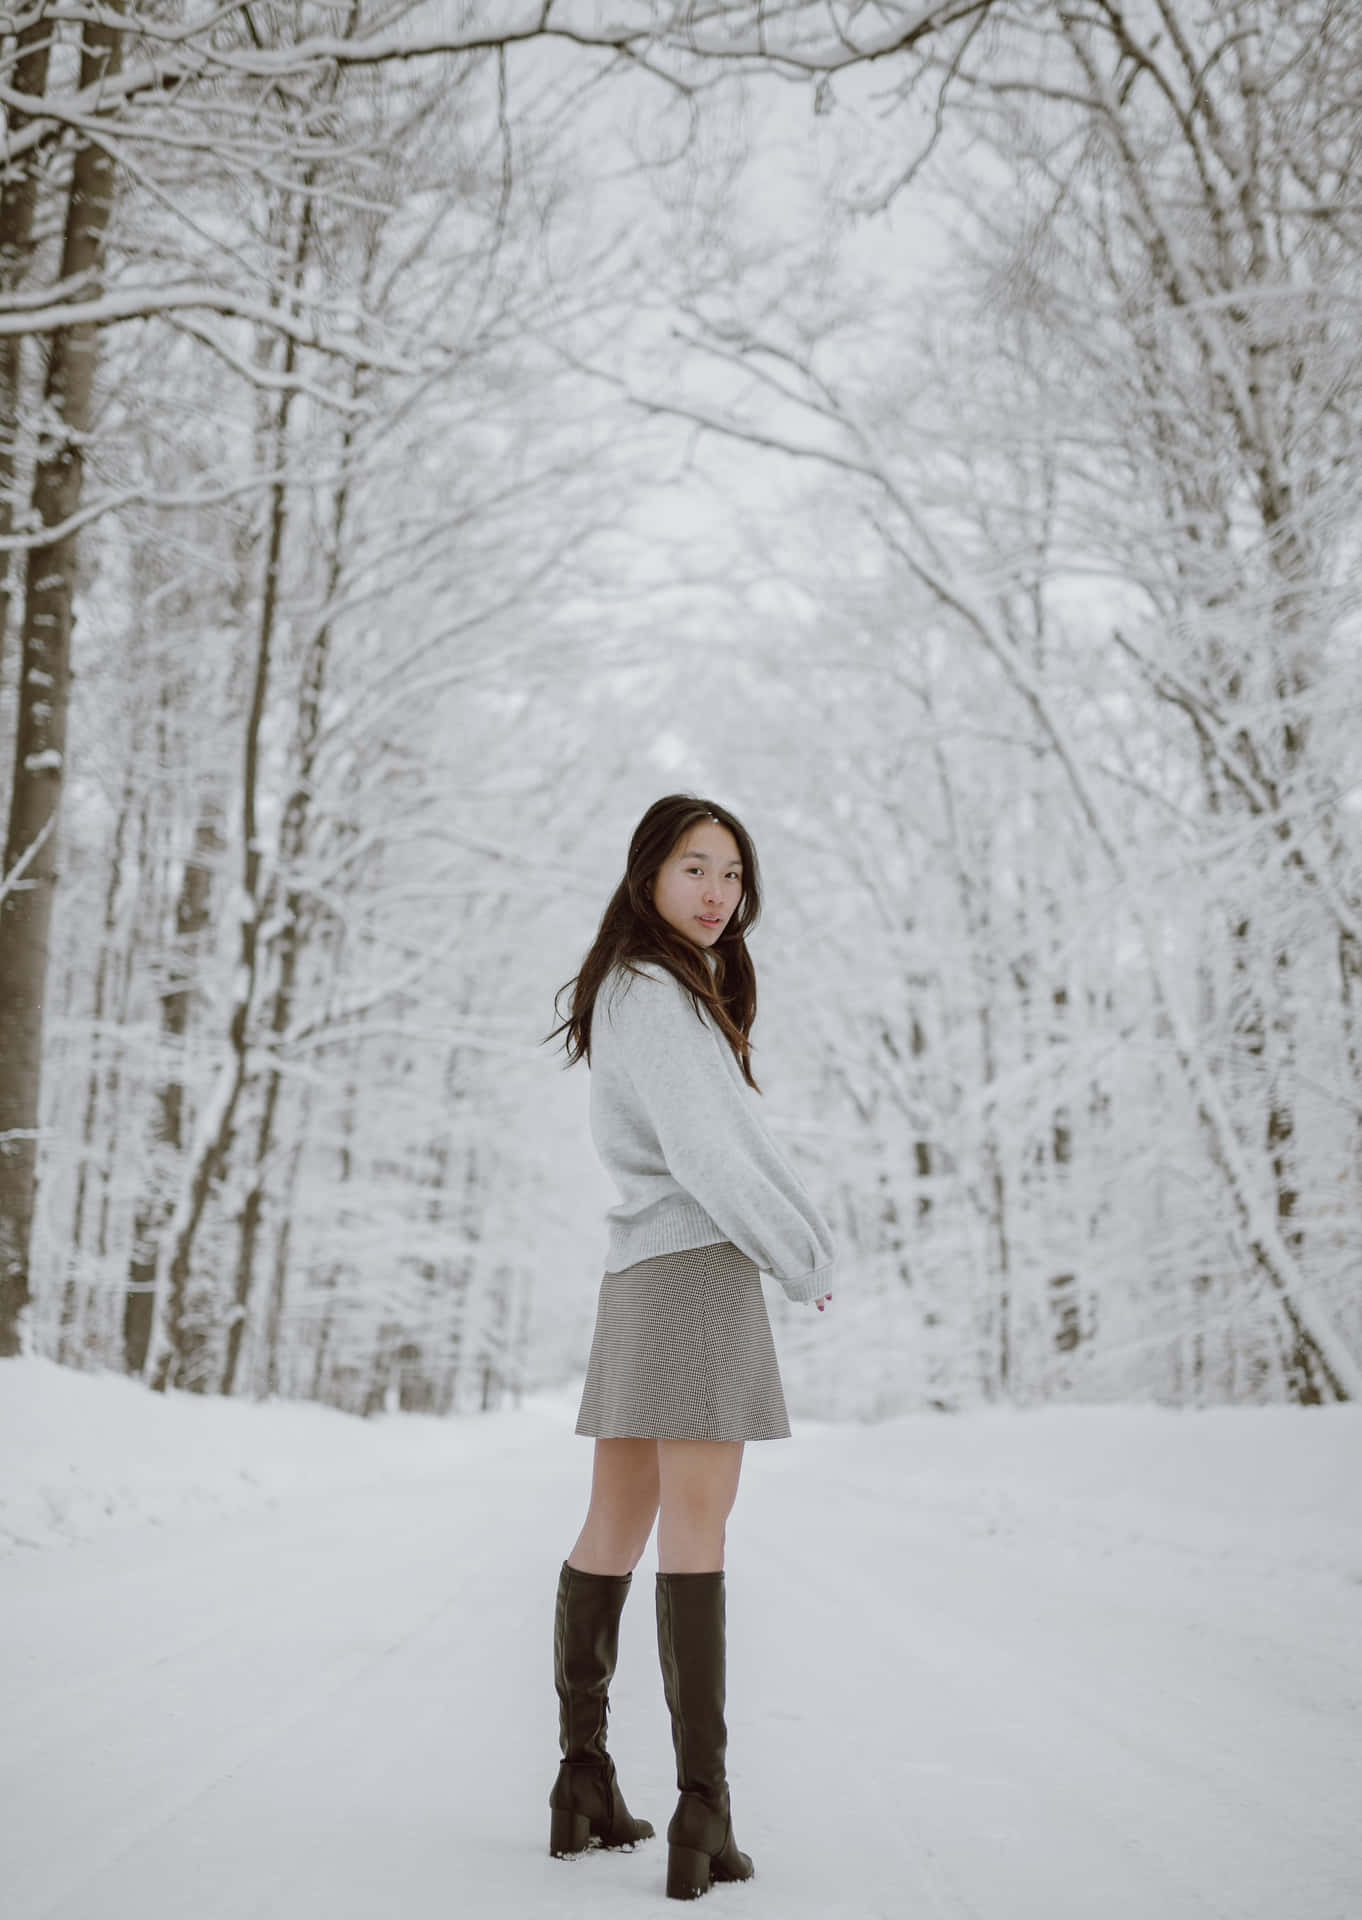 Download Gray Miniskirt In Winter Wallpaper | Wallpapers.com